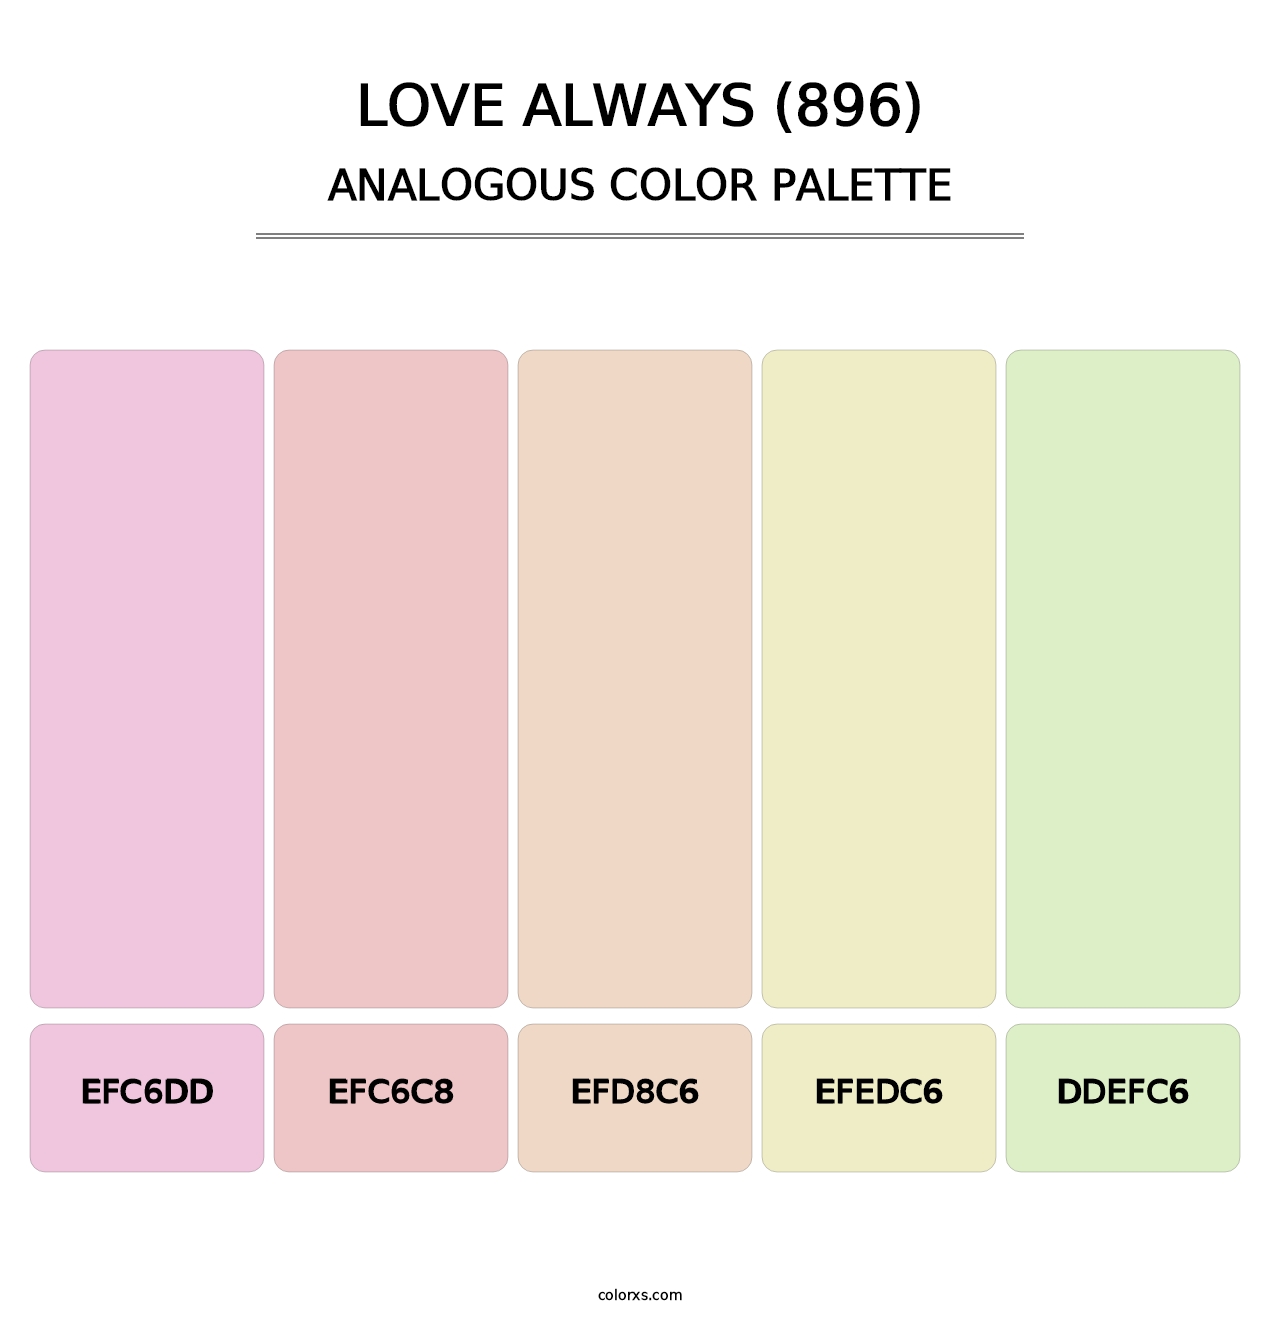 Love Always (896) - Analogous Color Palette